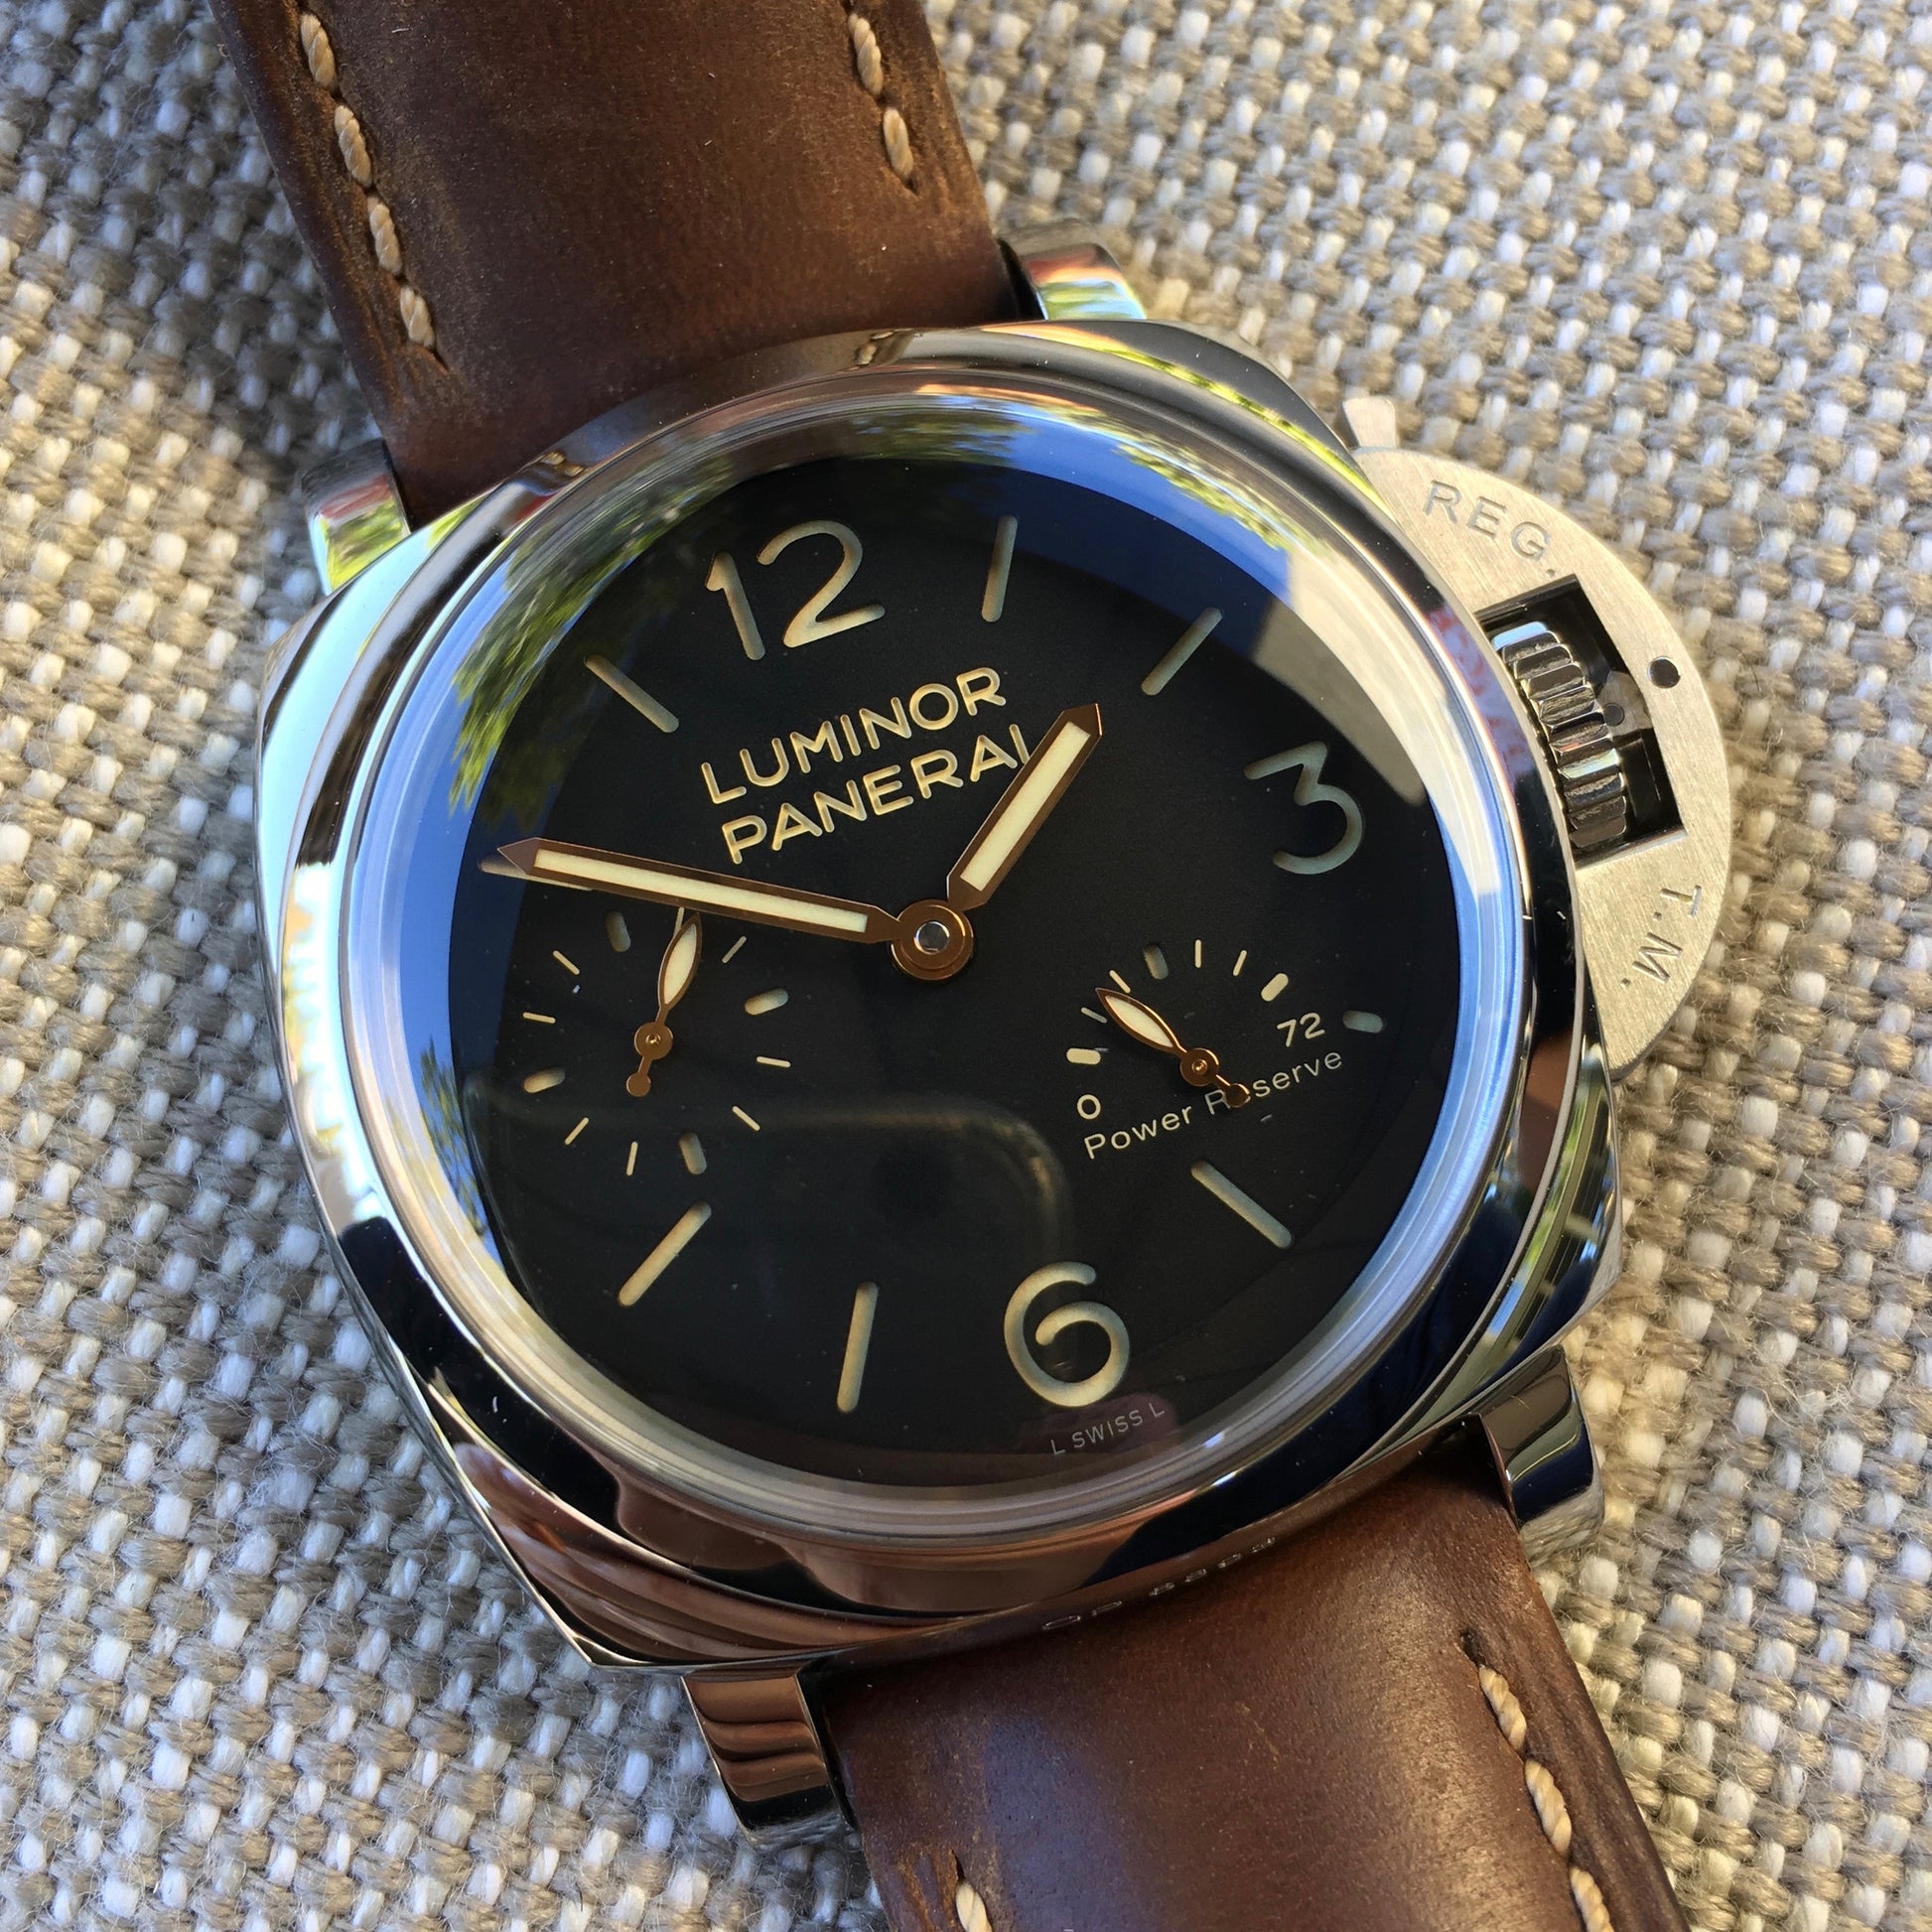 Panerai Luminor 1950 PAM 423 47mm 3 Days Power Reserve Brown Leather Wristwatch - Hashtag Watch Company